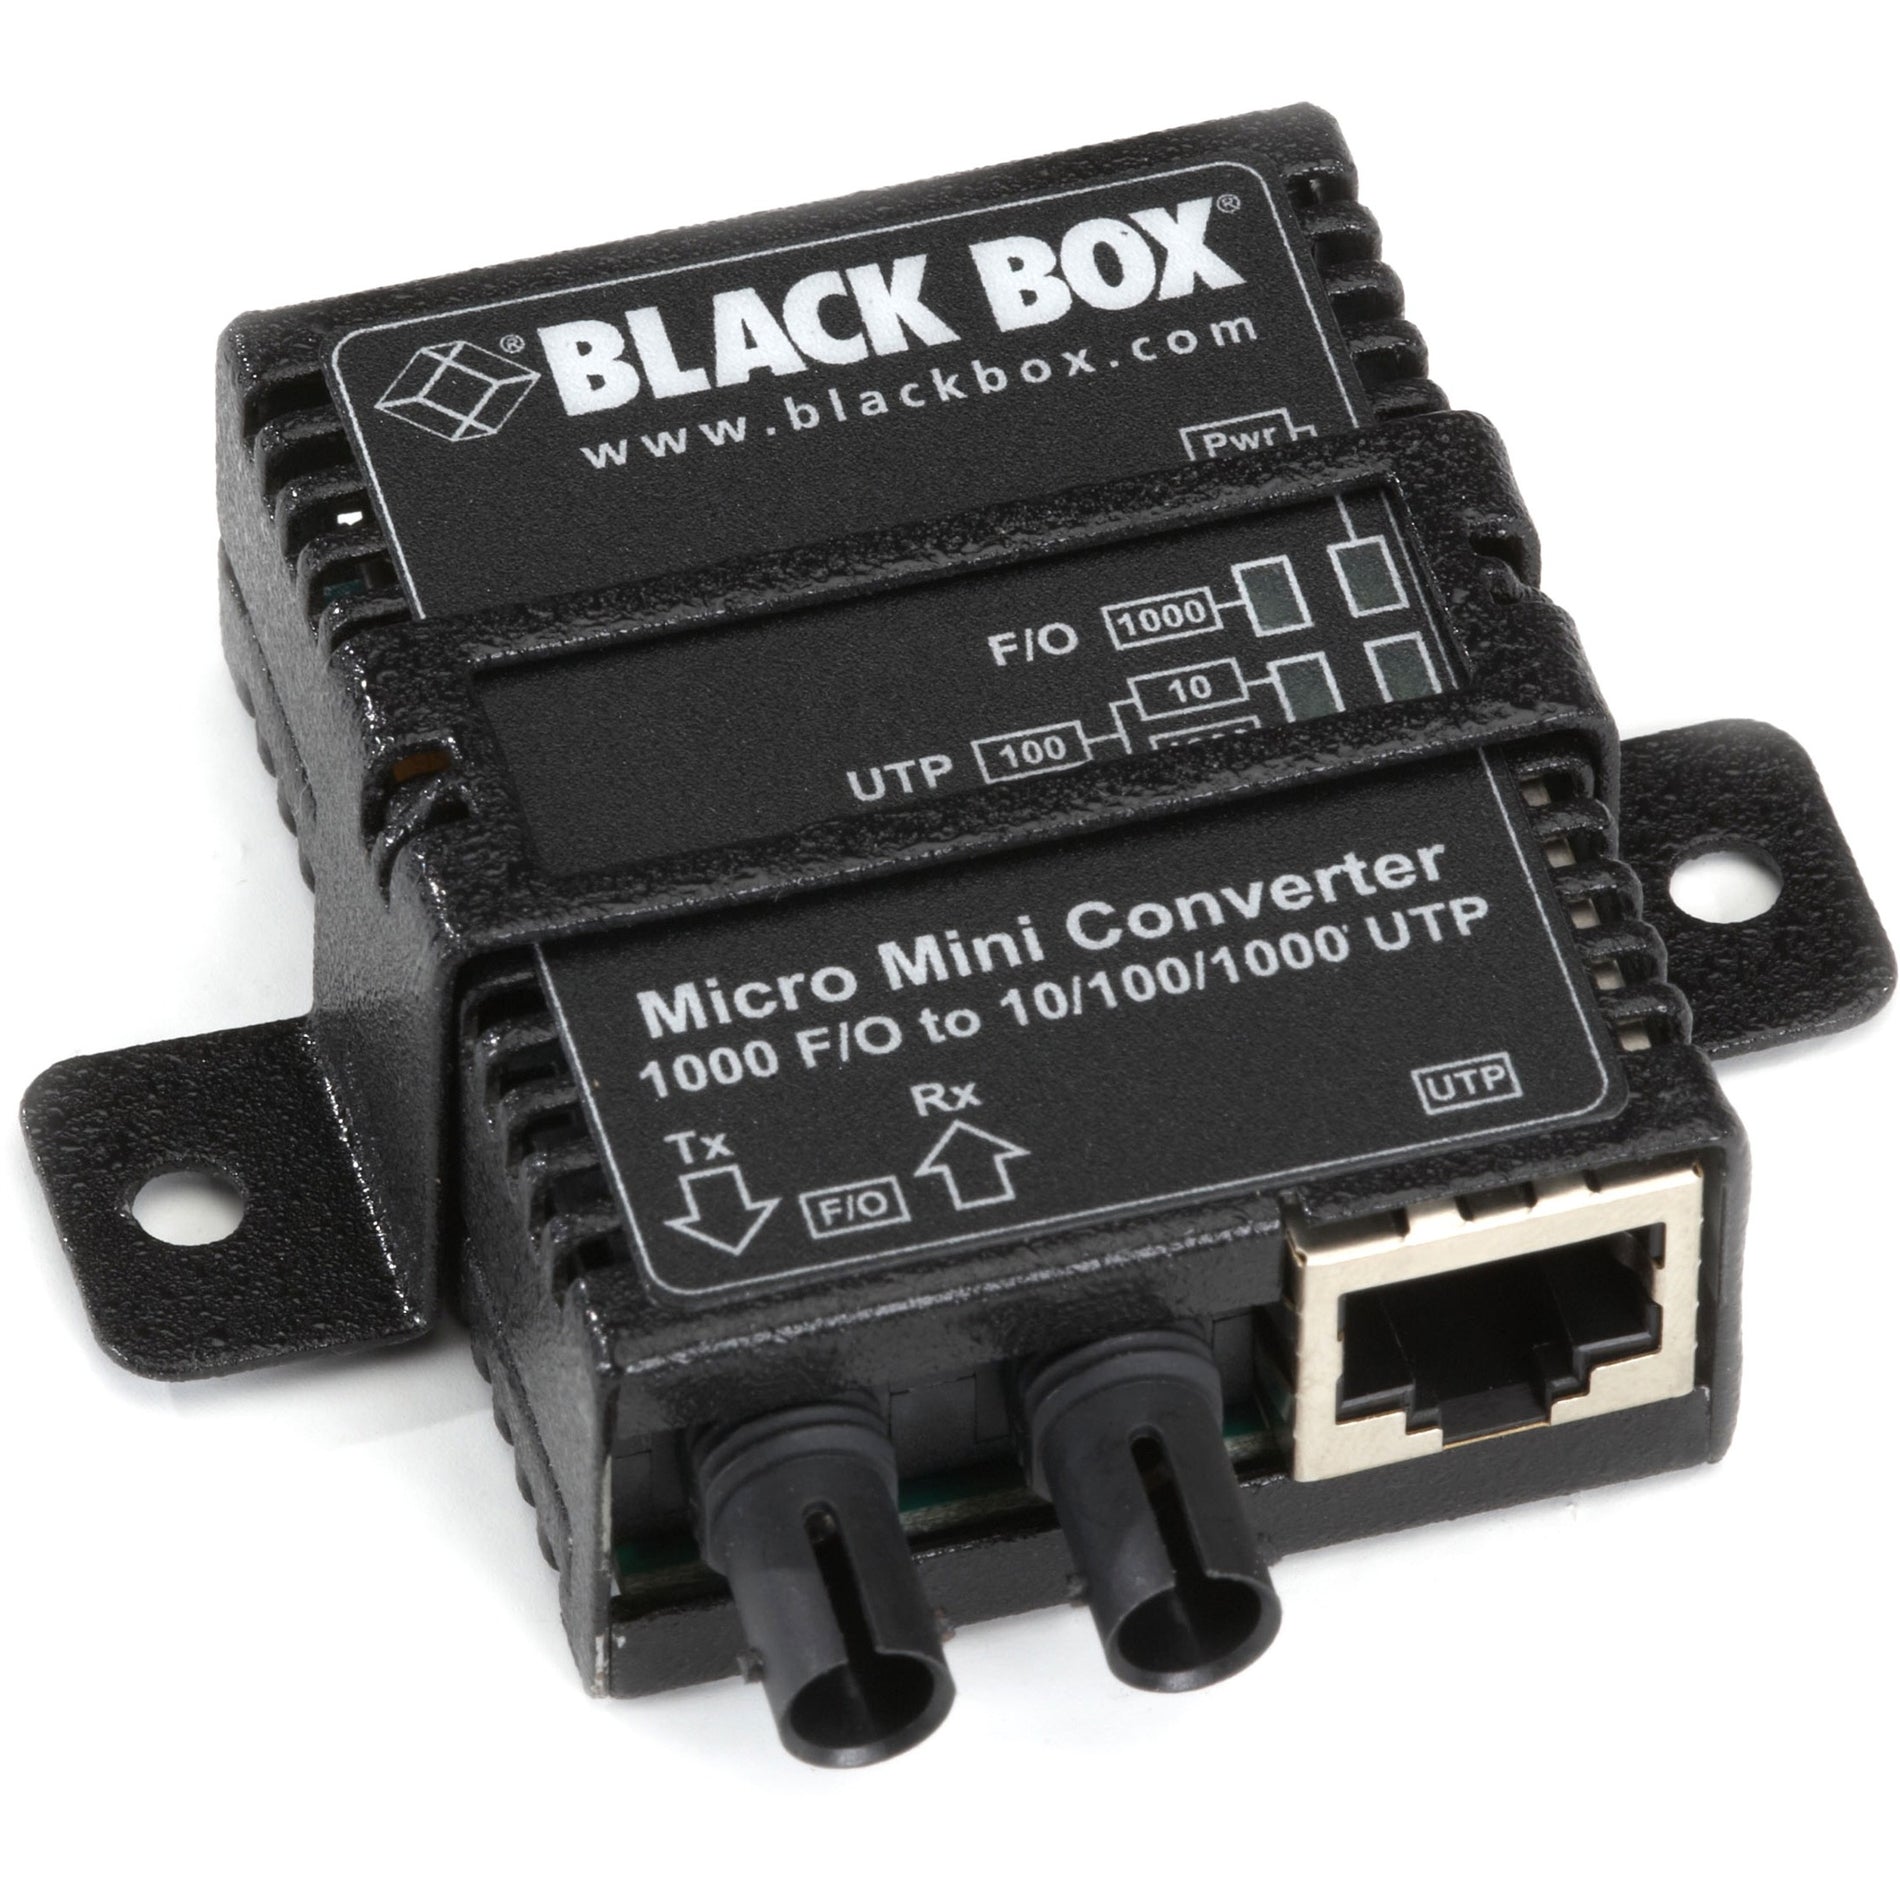 Black Box LMC400-WALL Micro Mini Media Converter Wallmount Bracket, 2 Year Limited Warranty, TAA Compliant, CE Certified